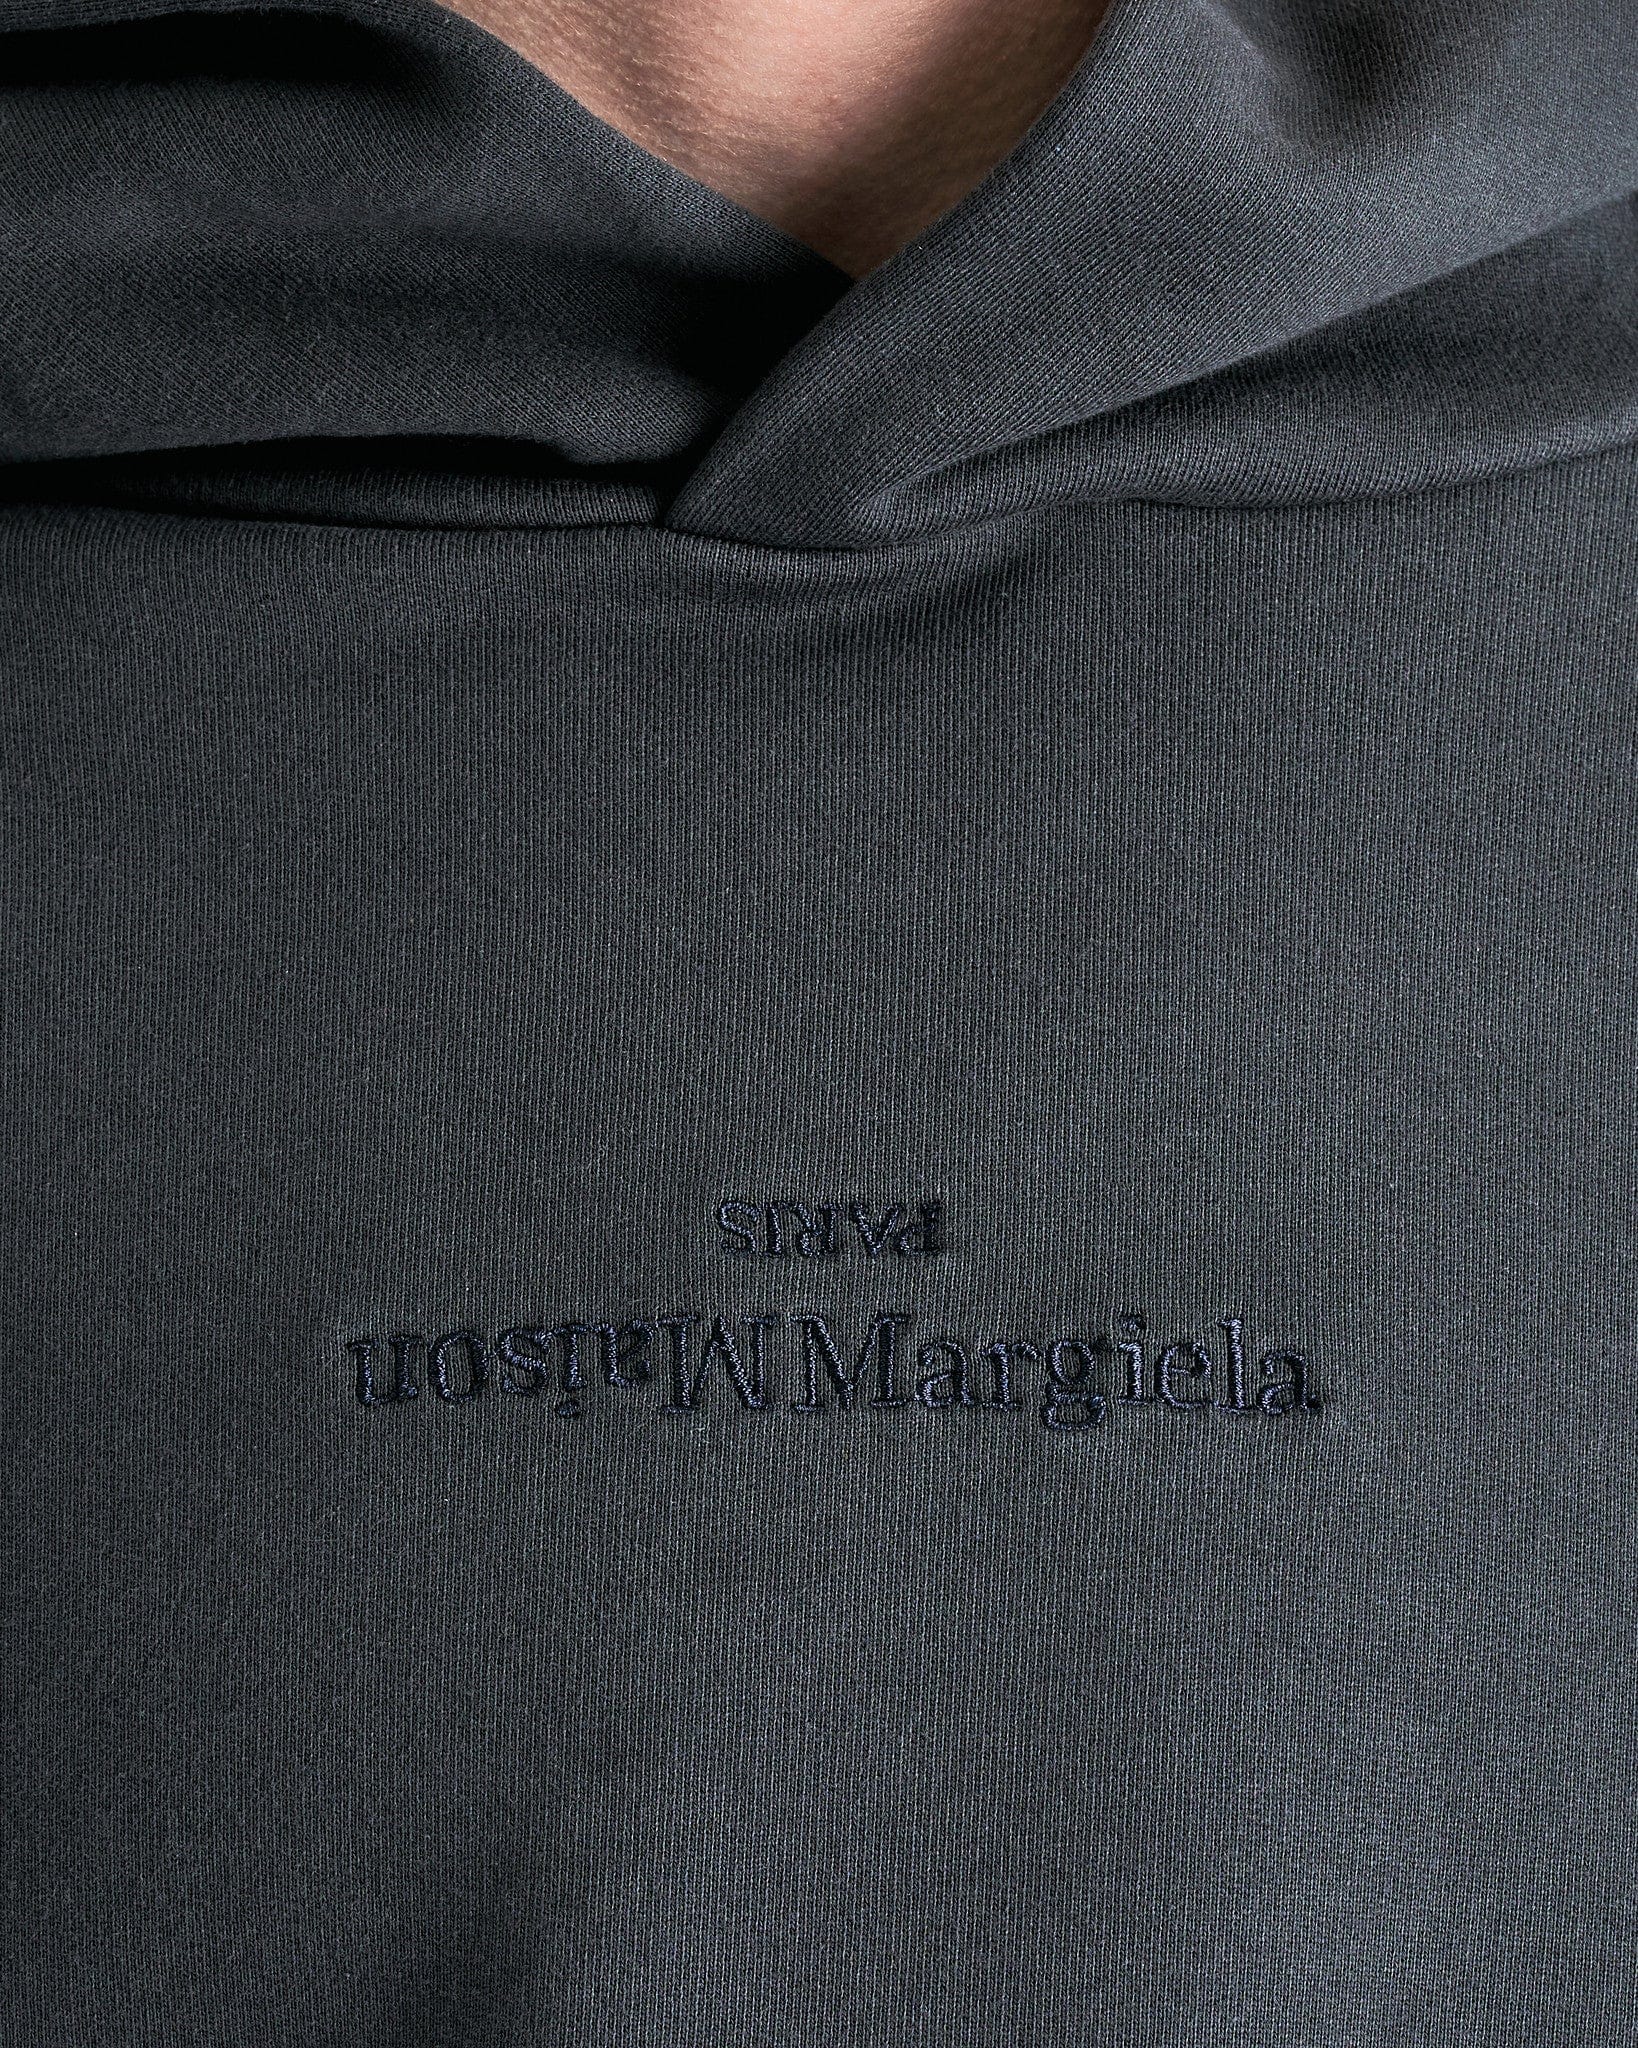 Maison Margiela Men's Sweatshirts Tonal Upside Down Logo Hoodies in Washed Black